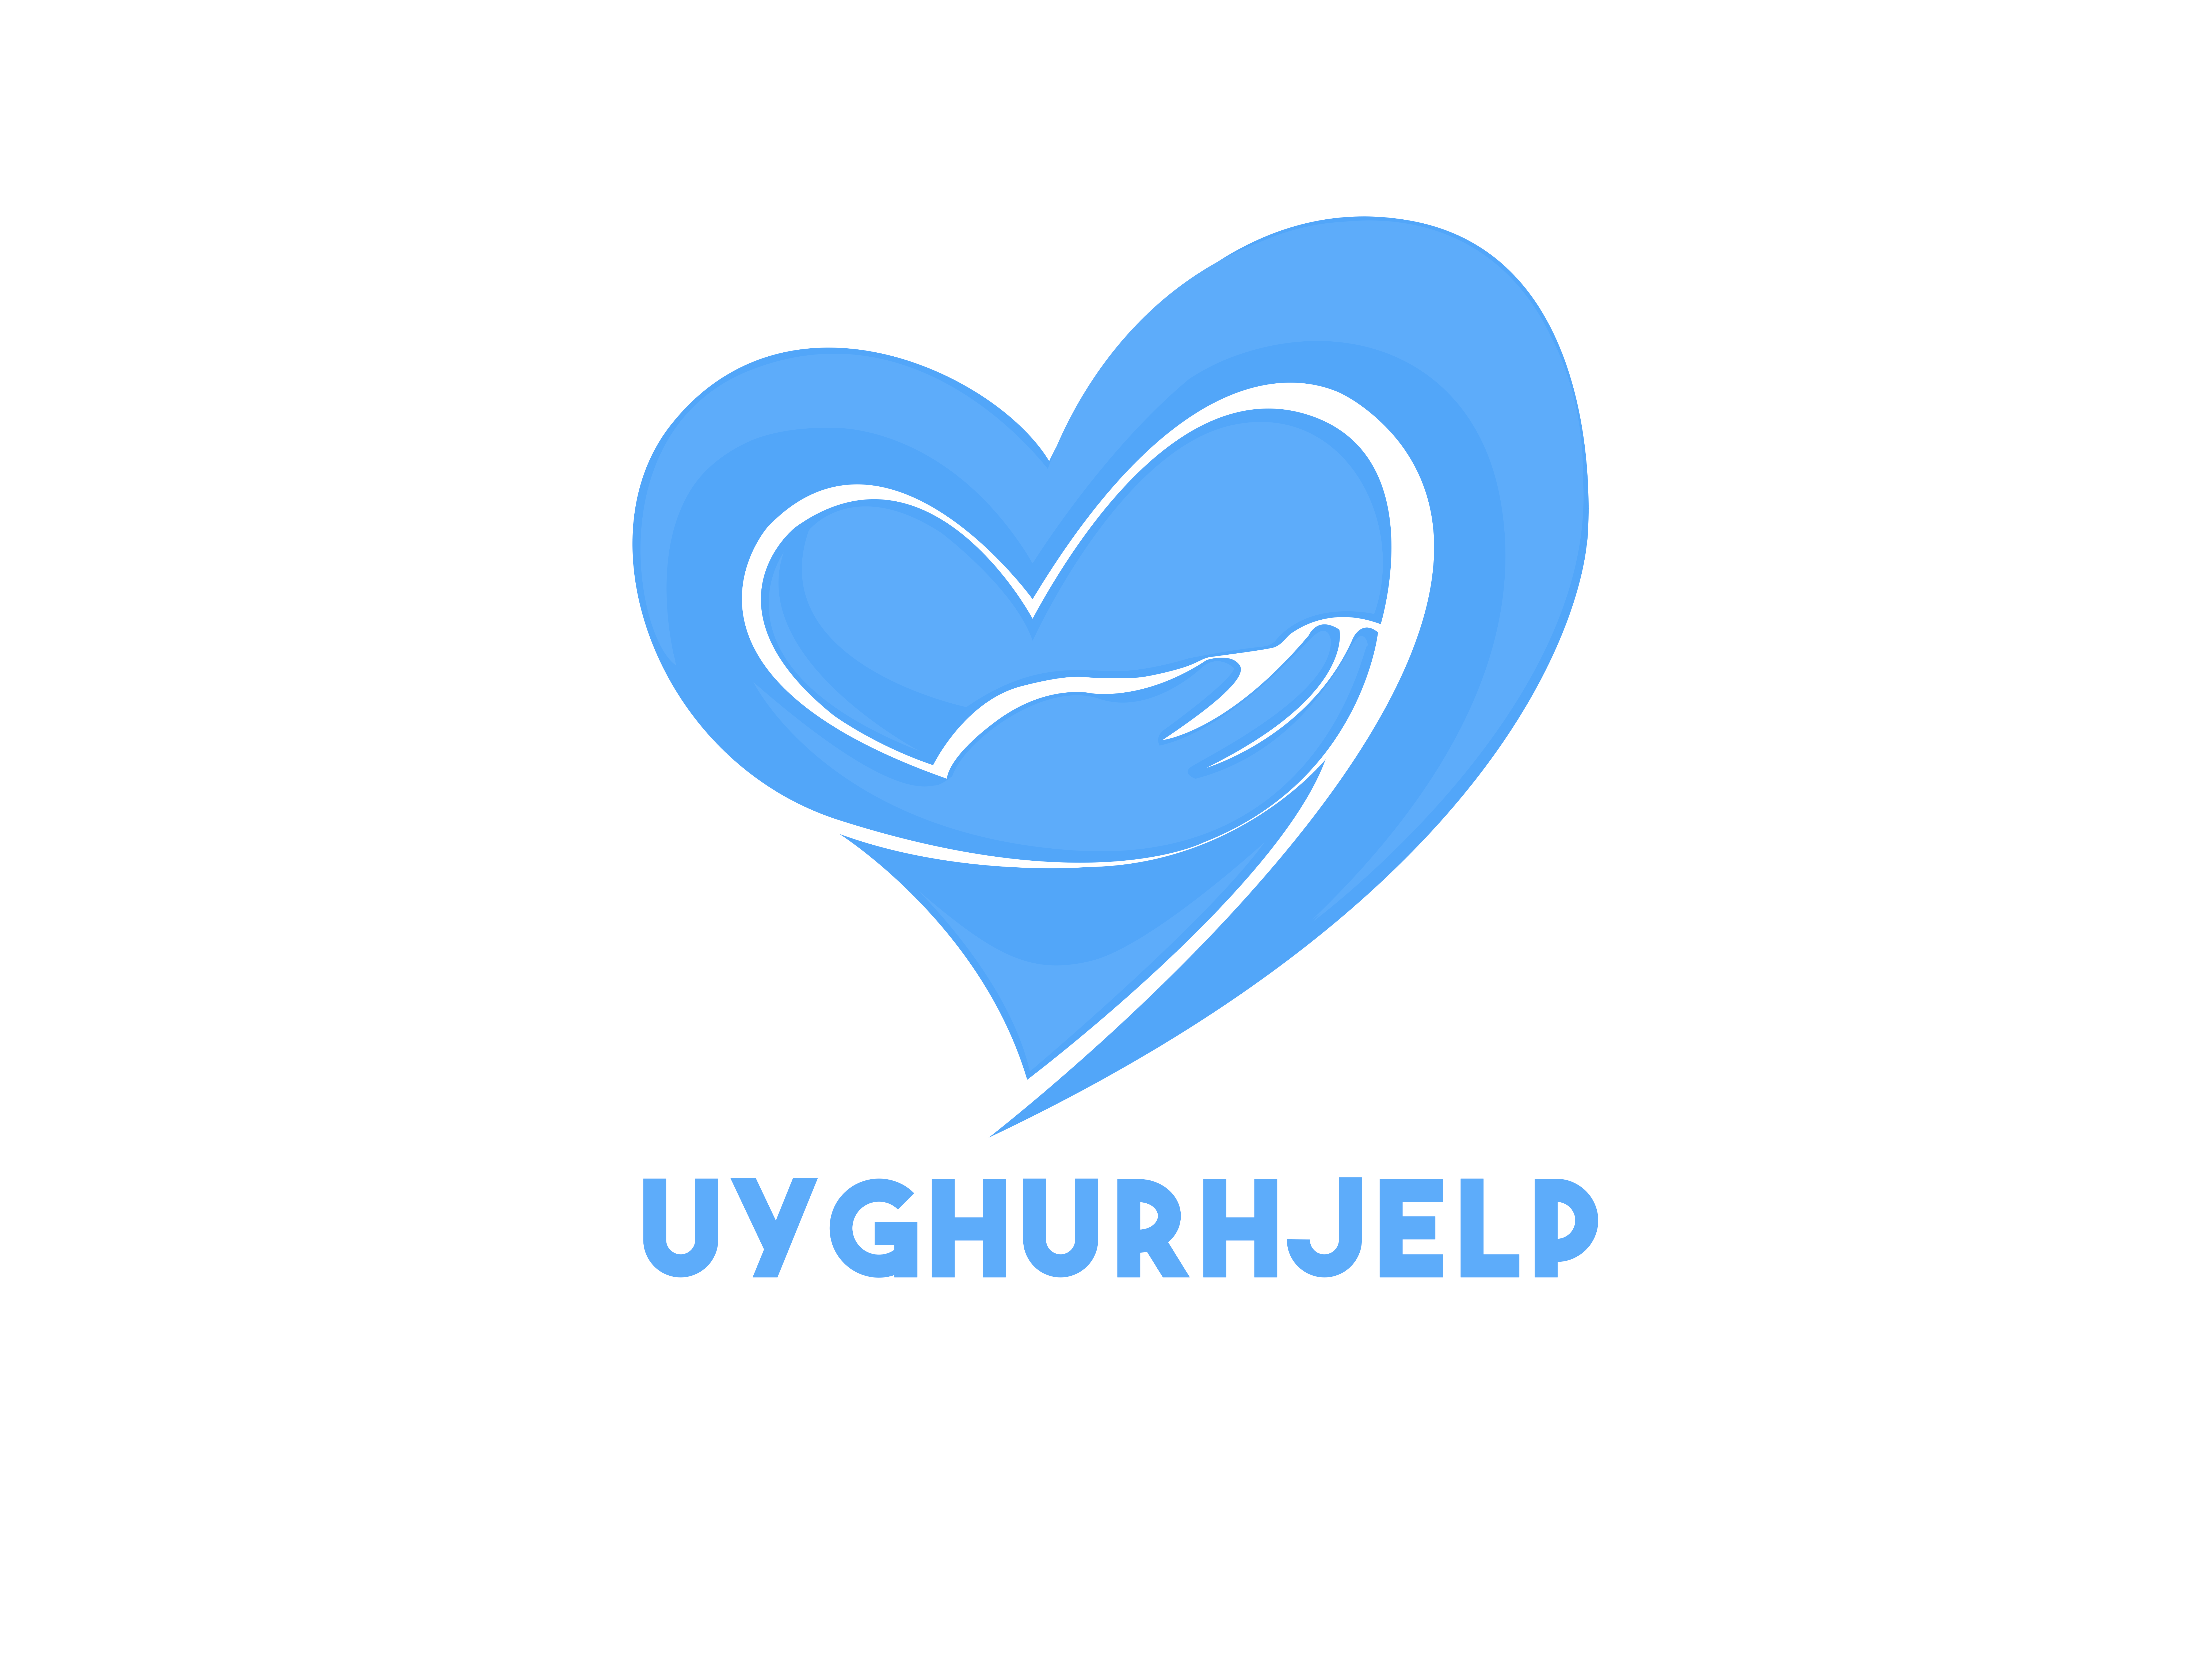 Uyghur Hjelp for helping Uyghurs